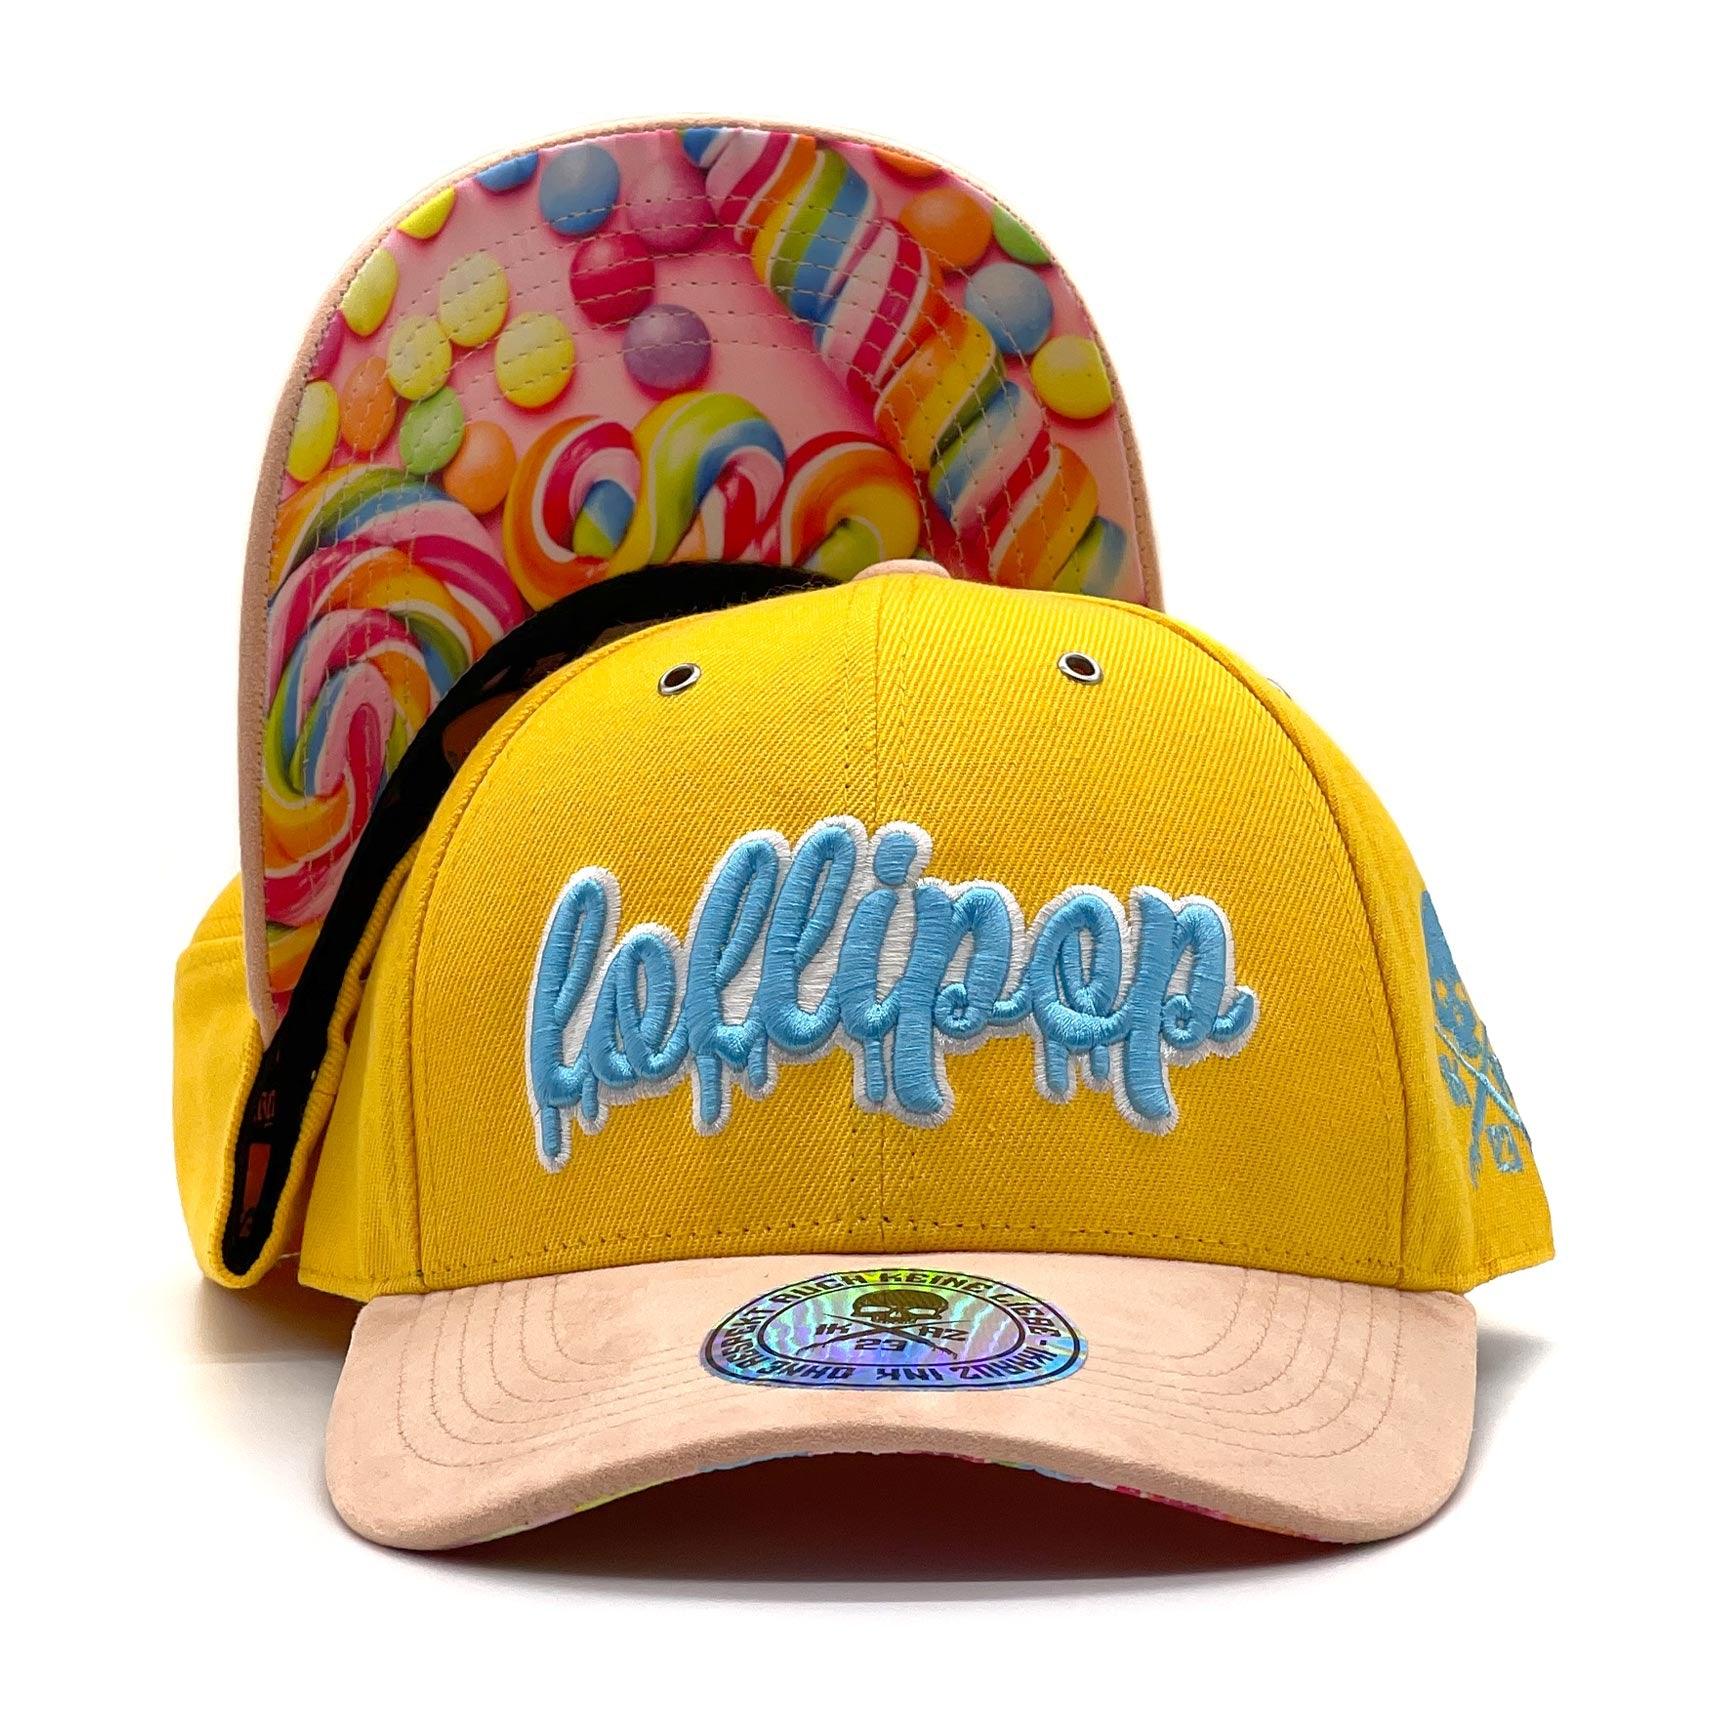 Ikrz | Lollipop | Curved Cap - Ikaruz